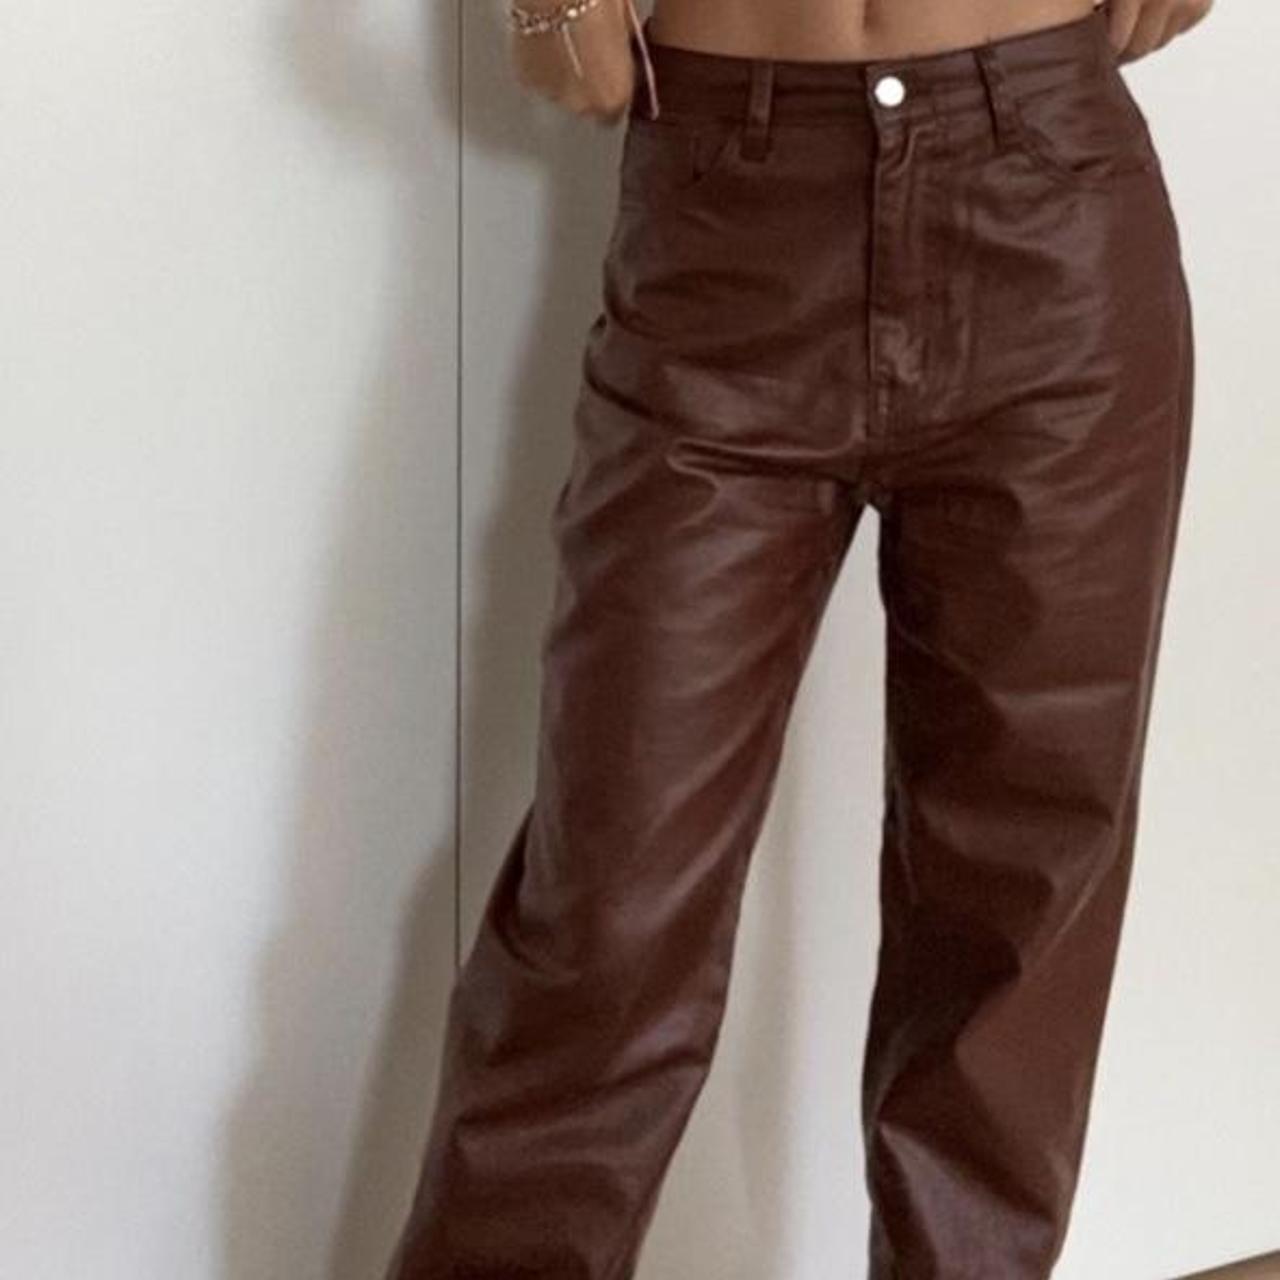 Prettylittlething fake leather pants Size uk 8 / EU... - Depop